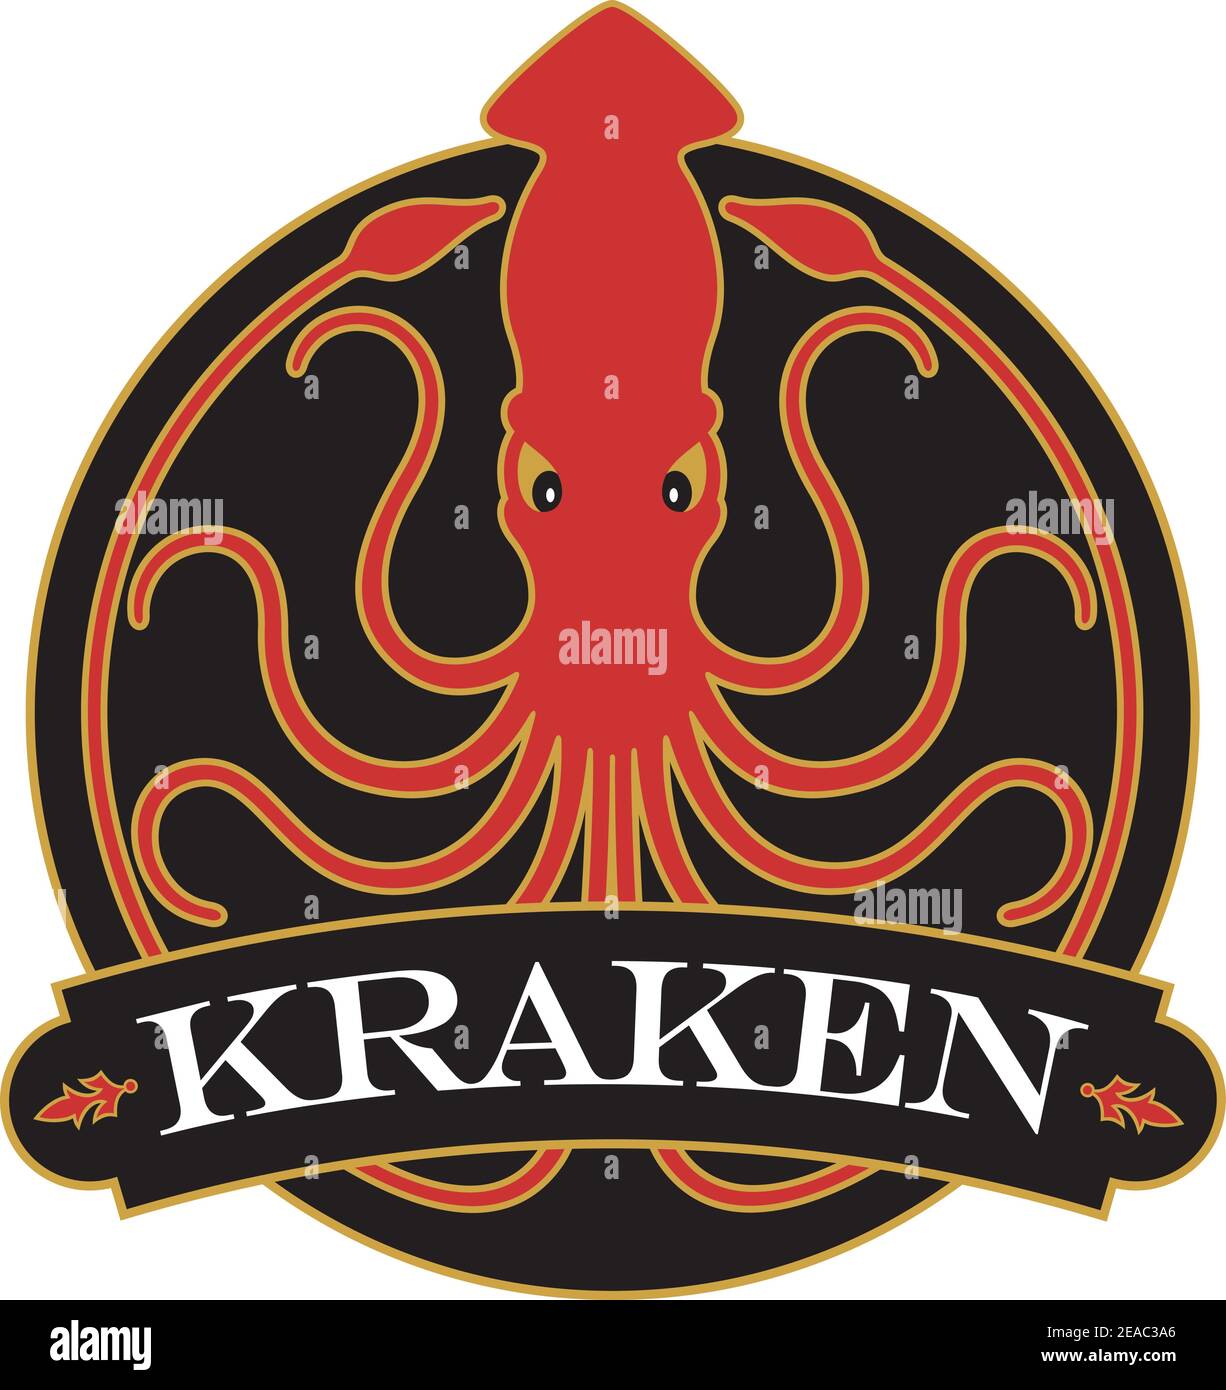 Kraken or Giant Squid badge, logo, or emblem design with ornate banner. Vector illustration with 10 curling tentacles creating circle design. Stock Vector